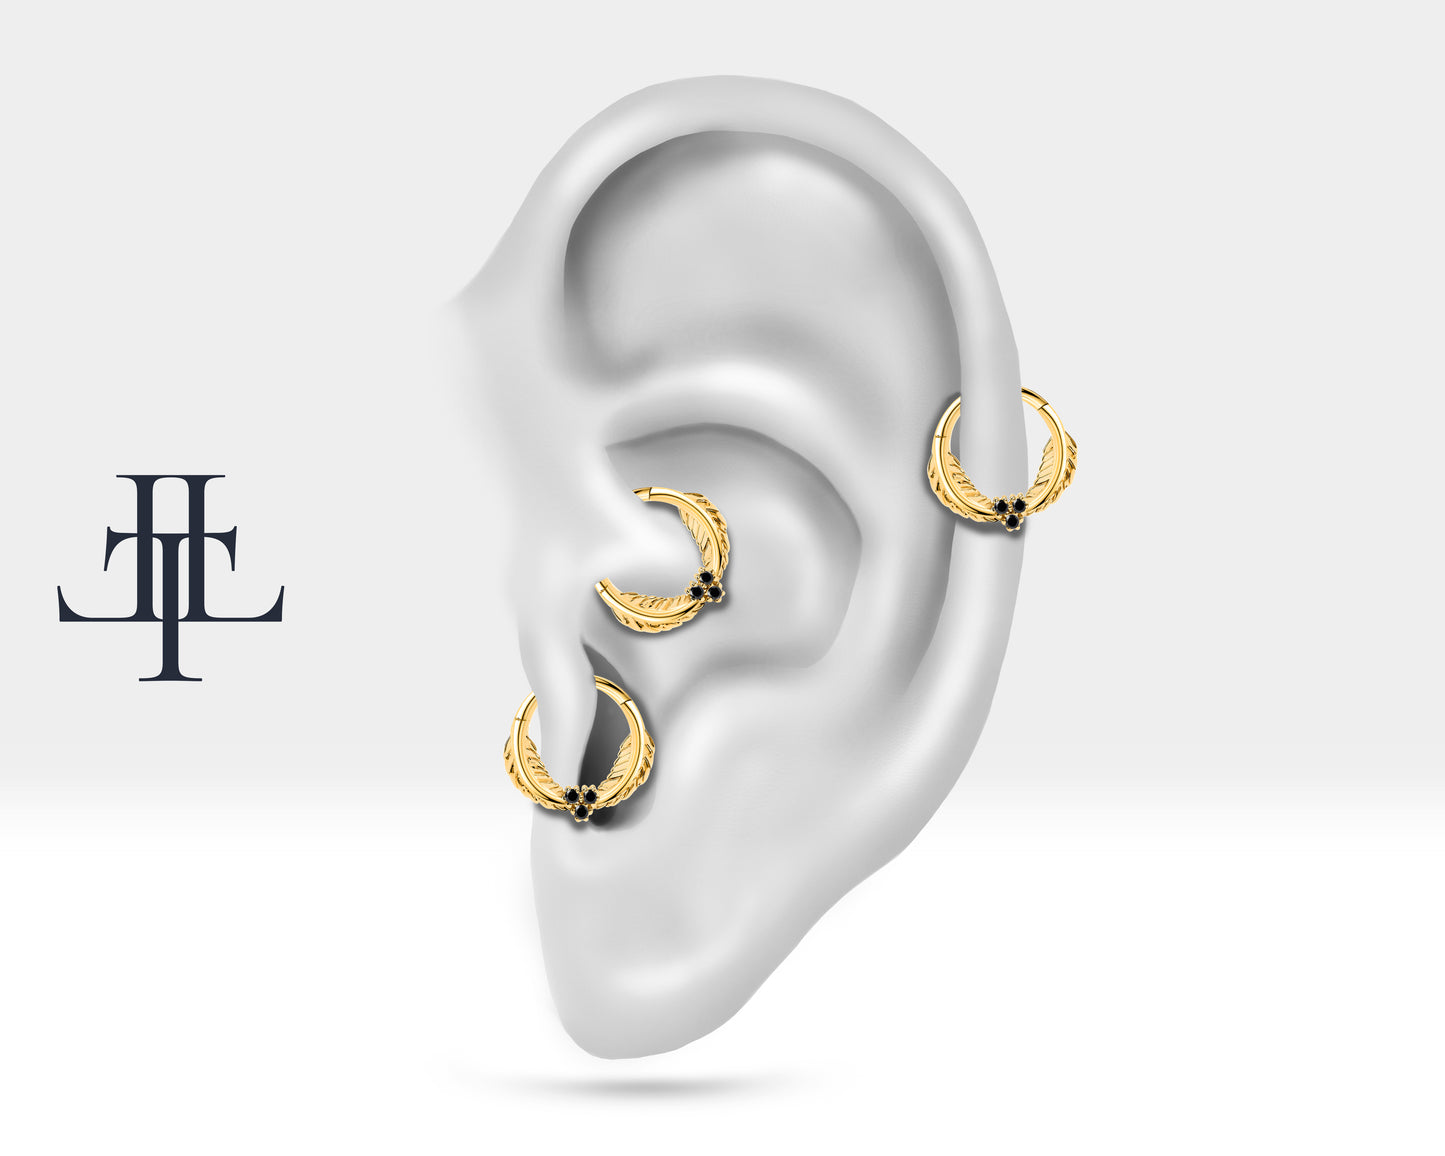 Cartilage Hoop,Leaf Design Black Diamond Clicker Piercing,14K Yellow Solid Gold,16G(1.2mm)